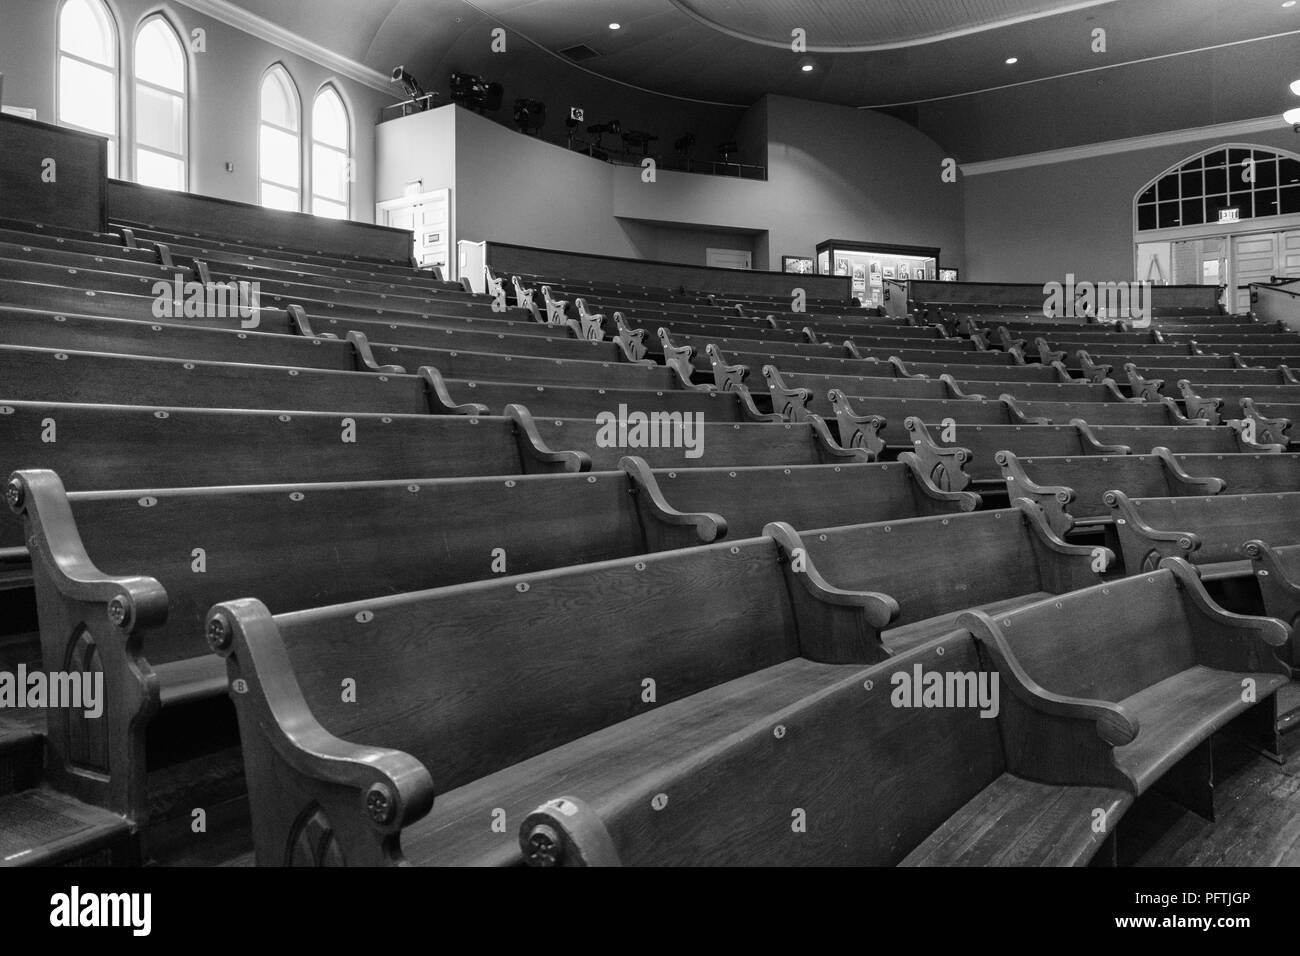 Inside the Ryman Auditorium in Nashville in black and white Stock Photo